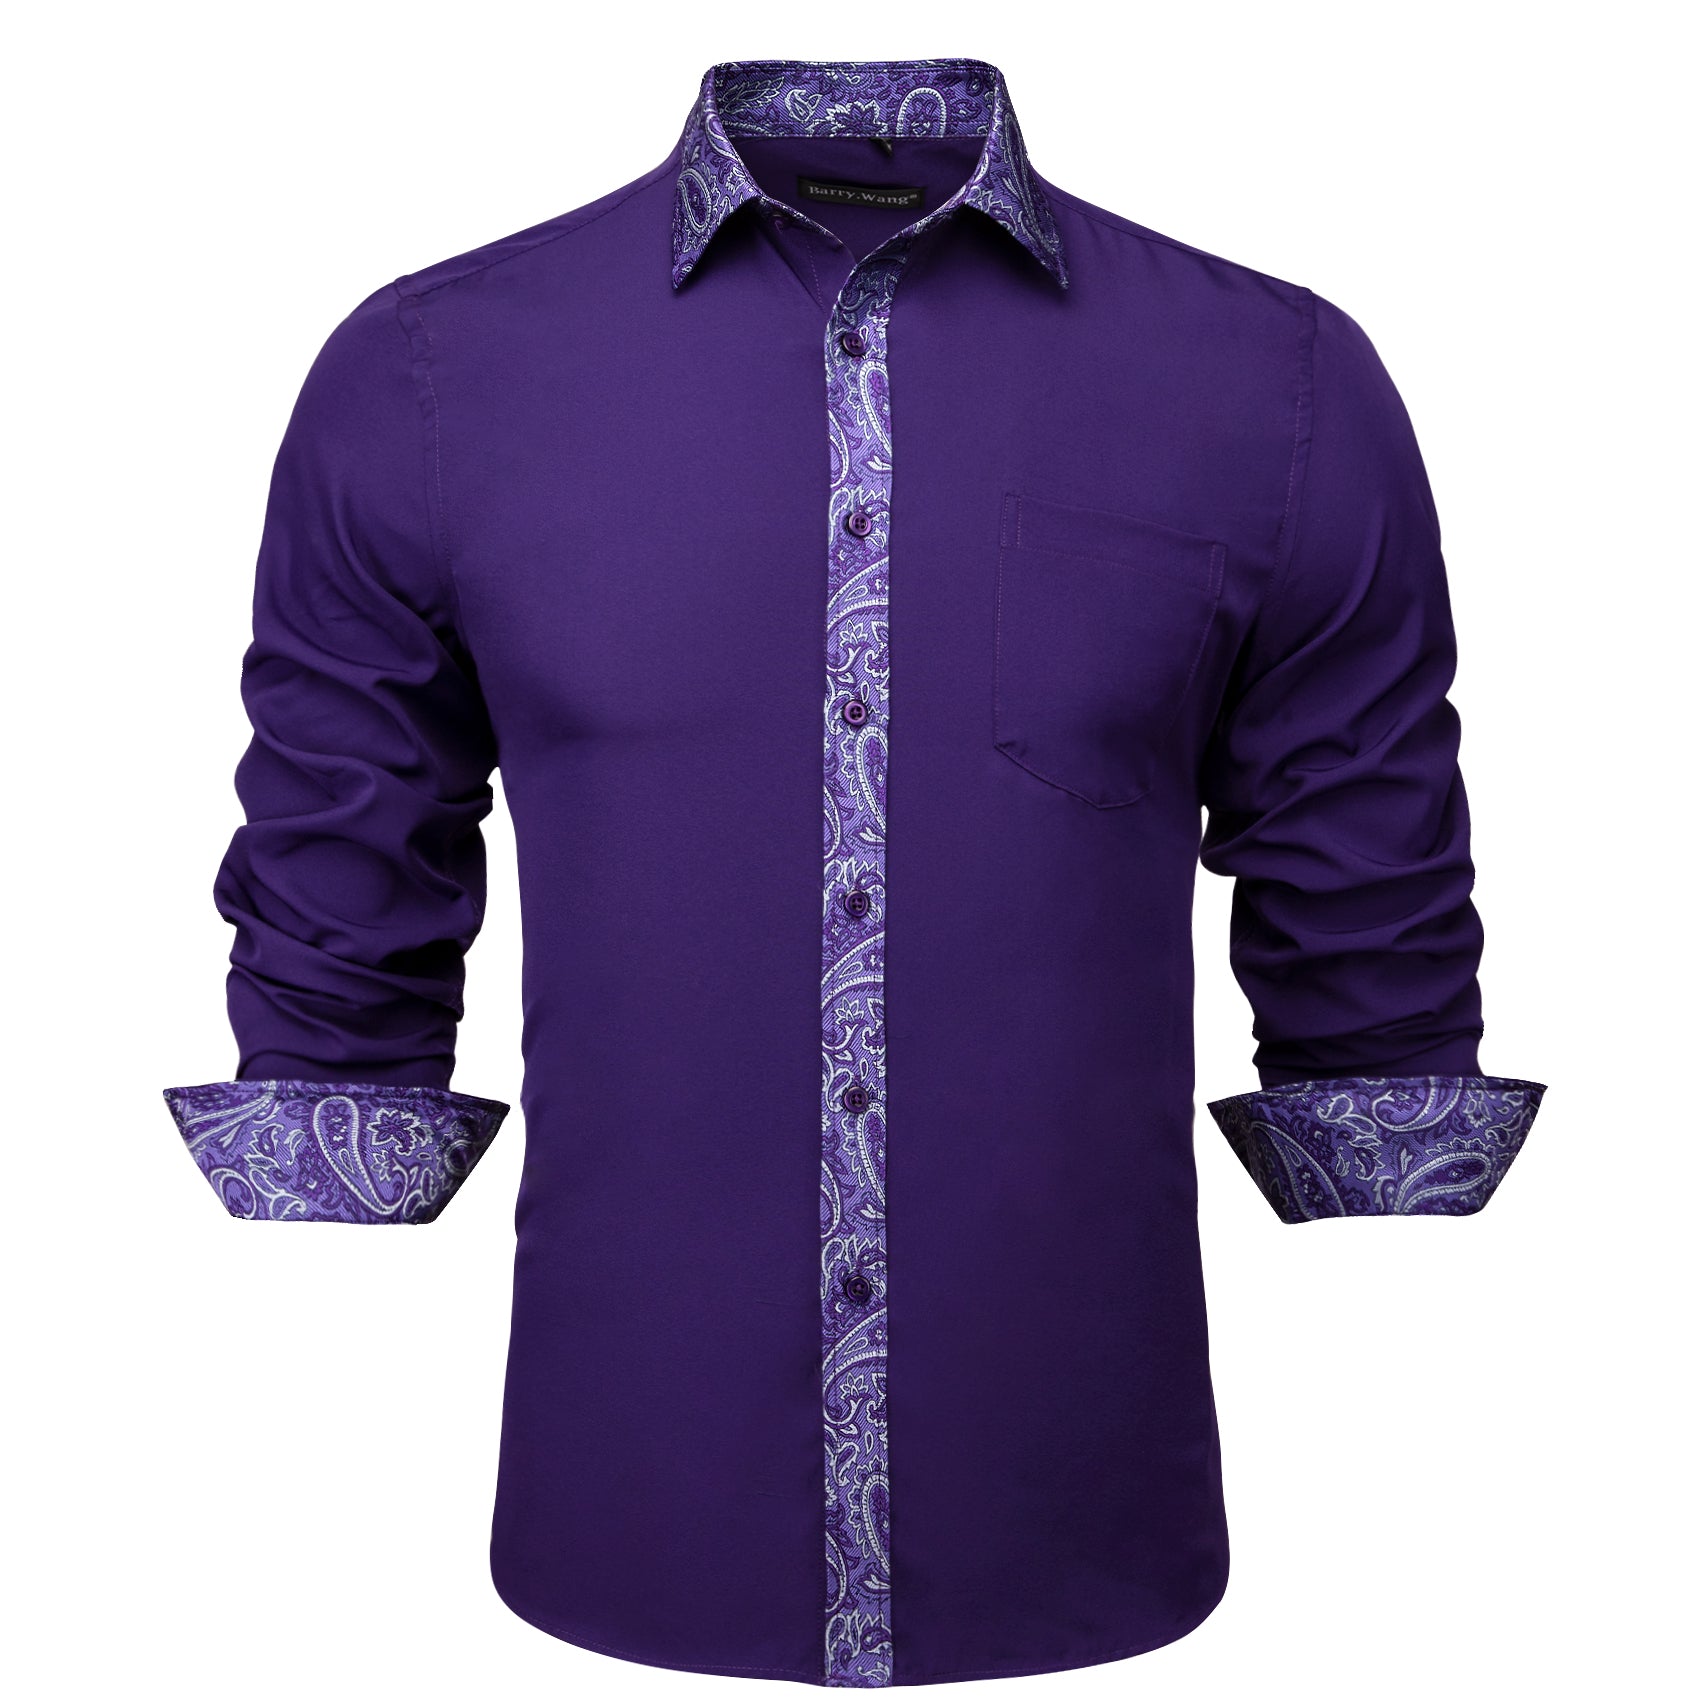 Barry.wang Purple Splicing Men's Business Shirt